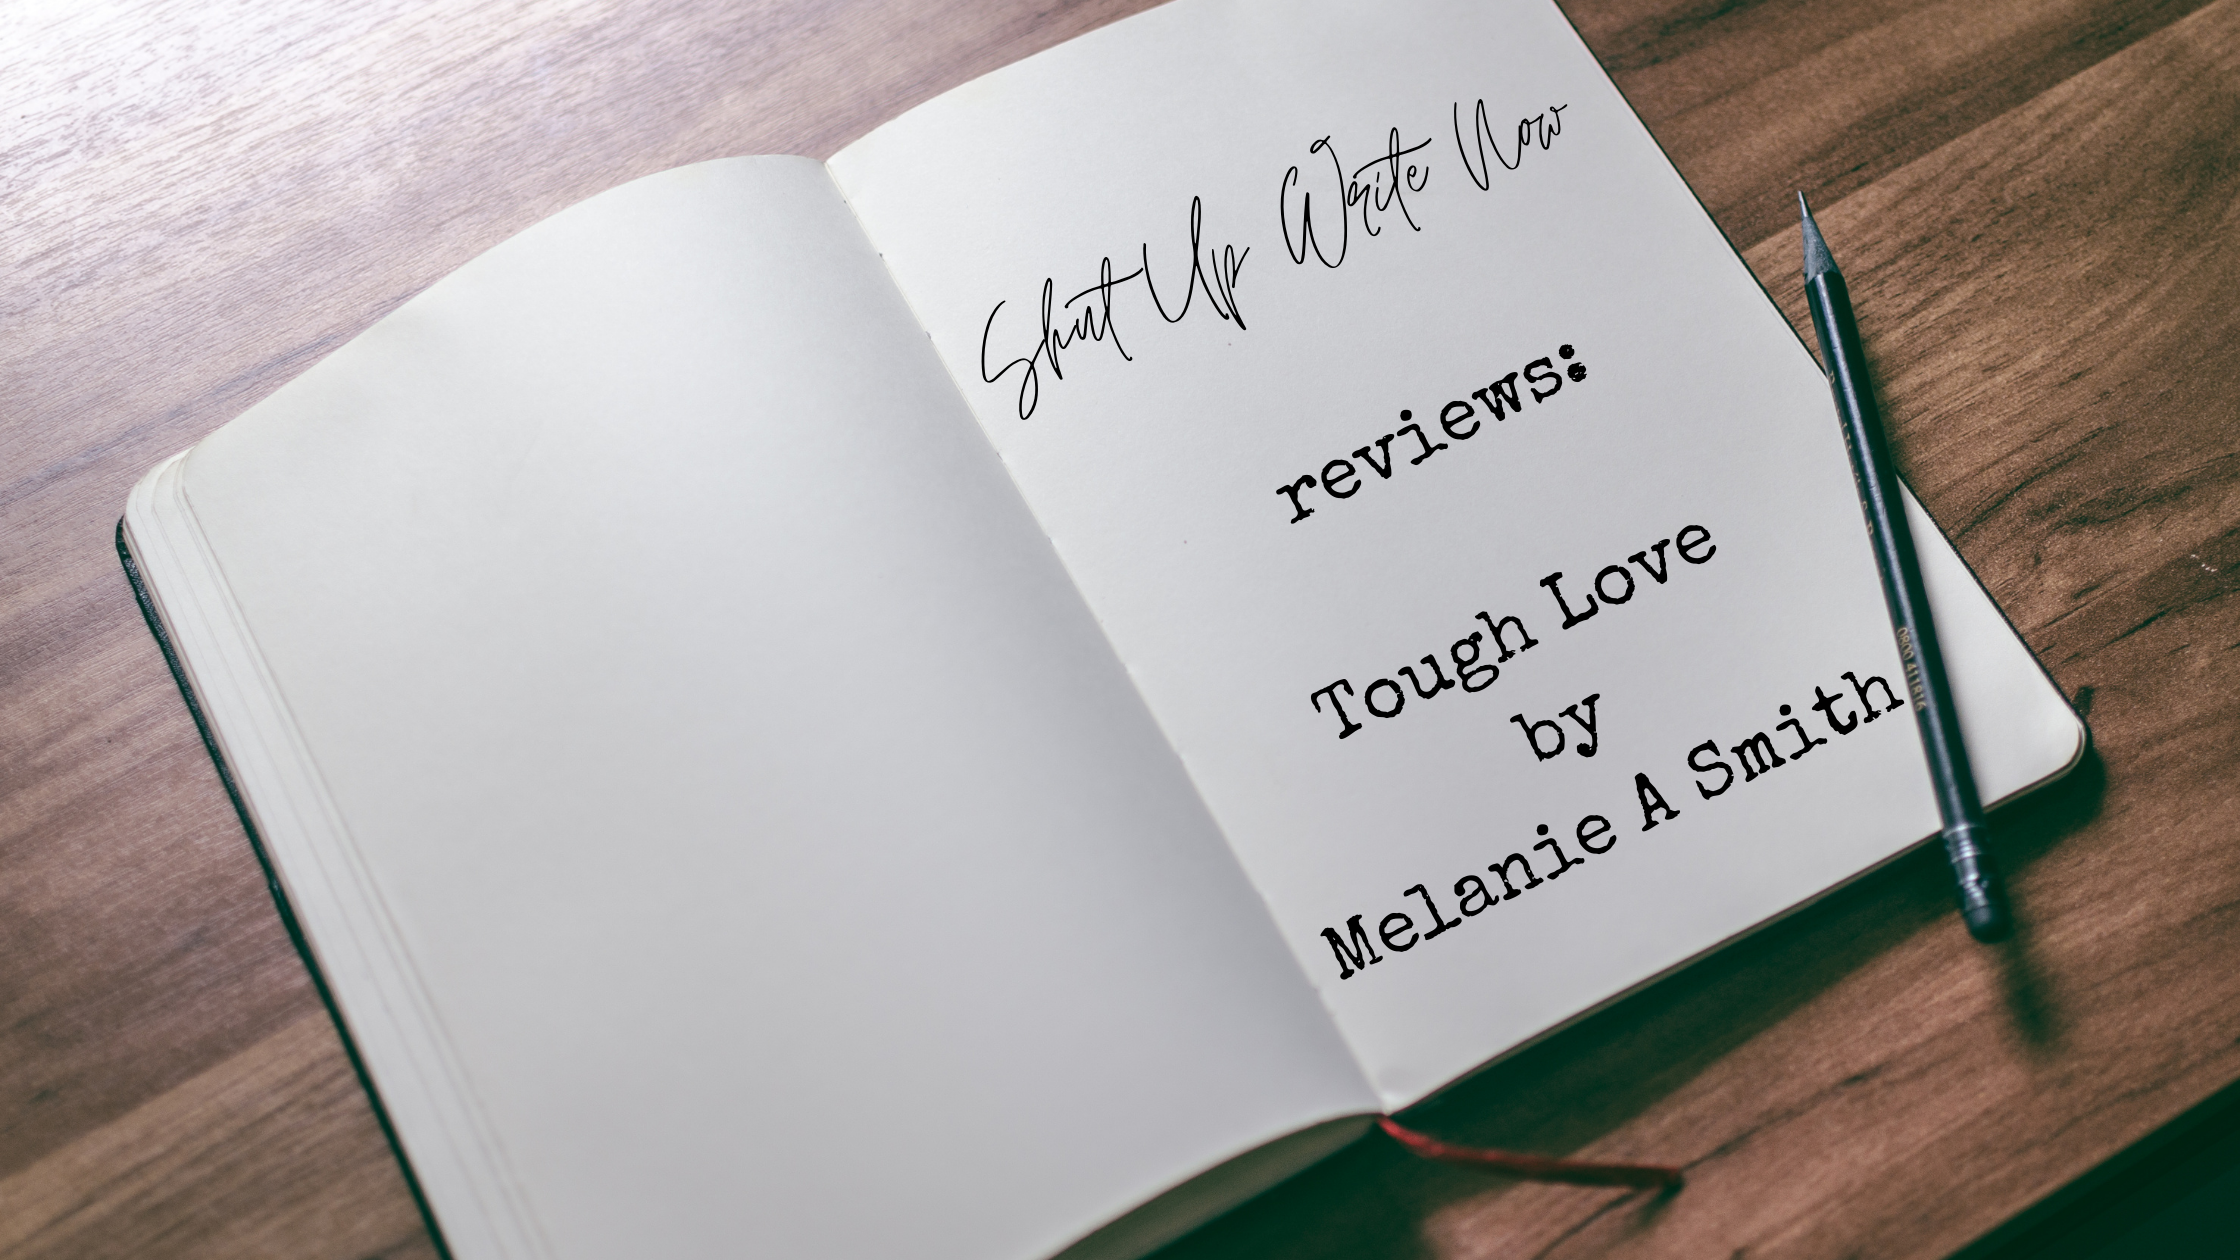 Tough Love by Melanie A Smith